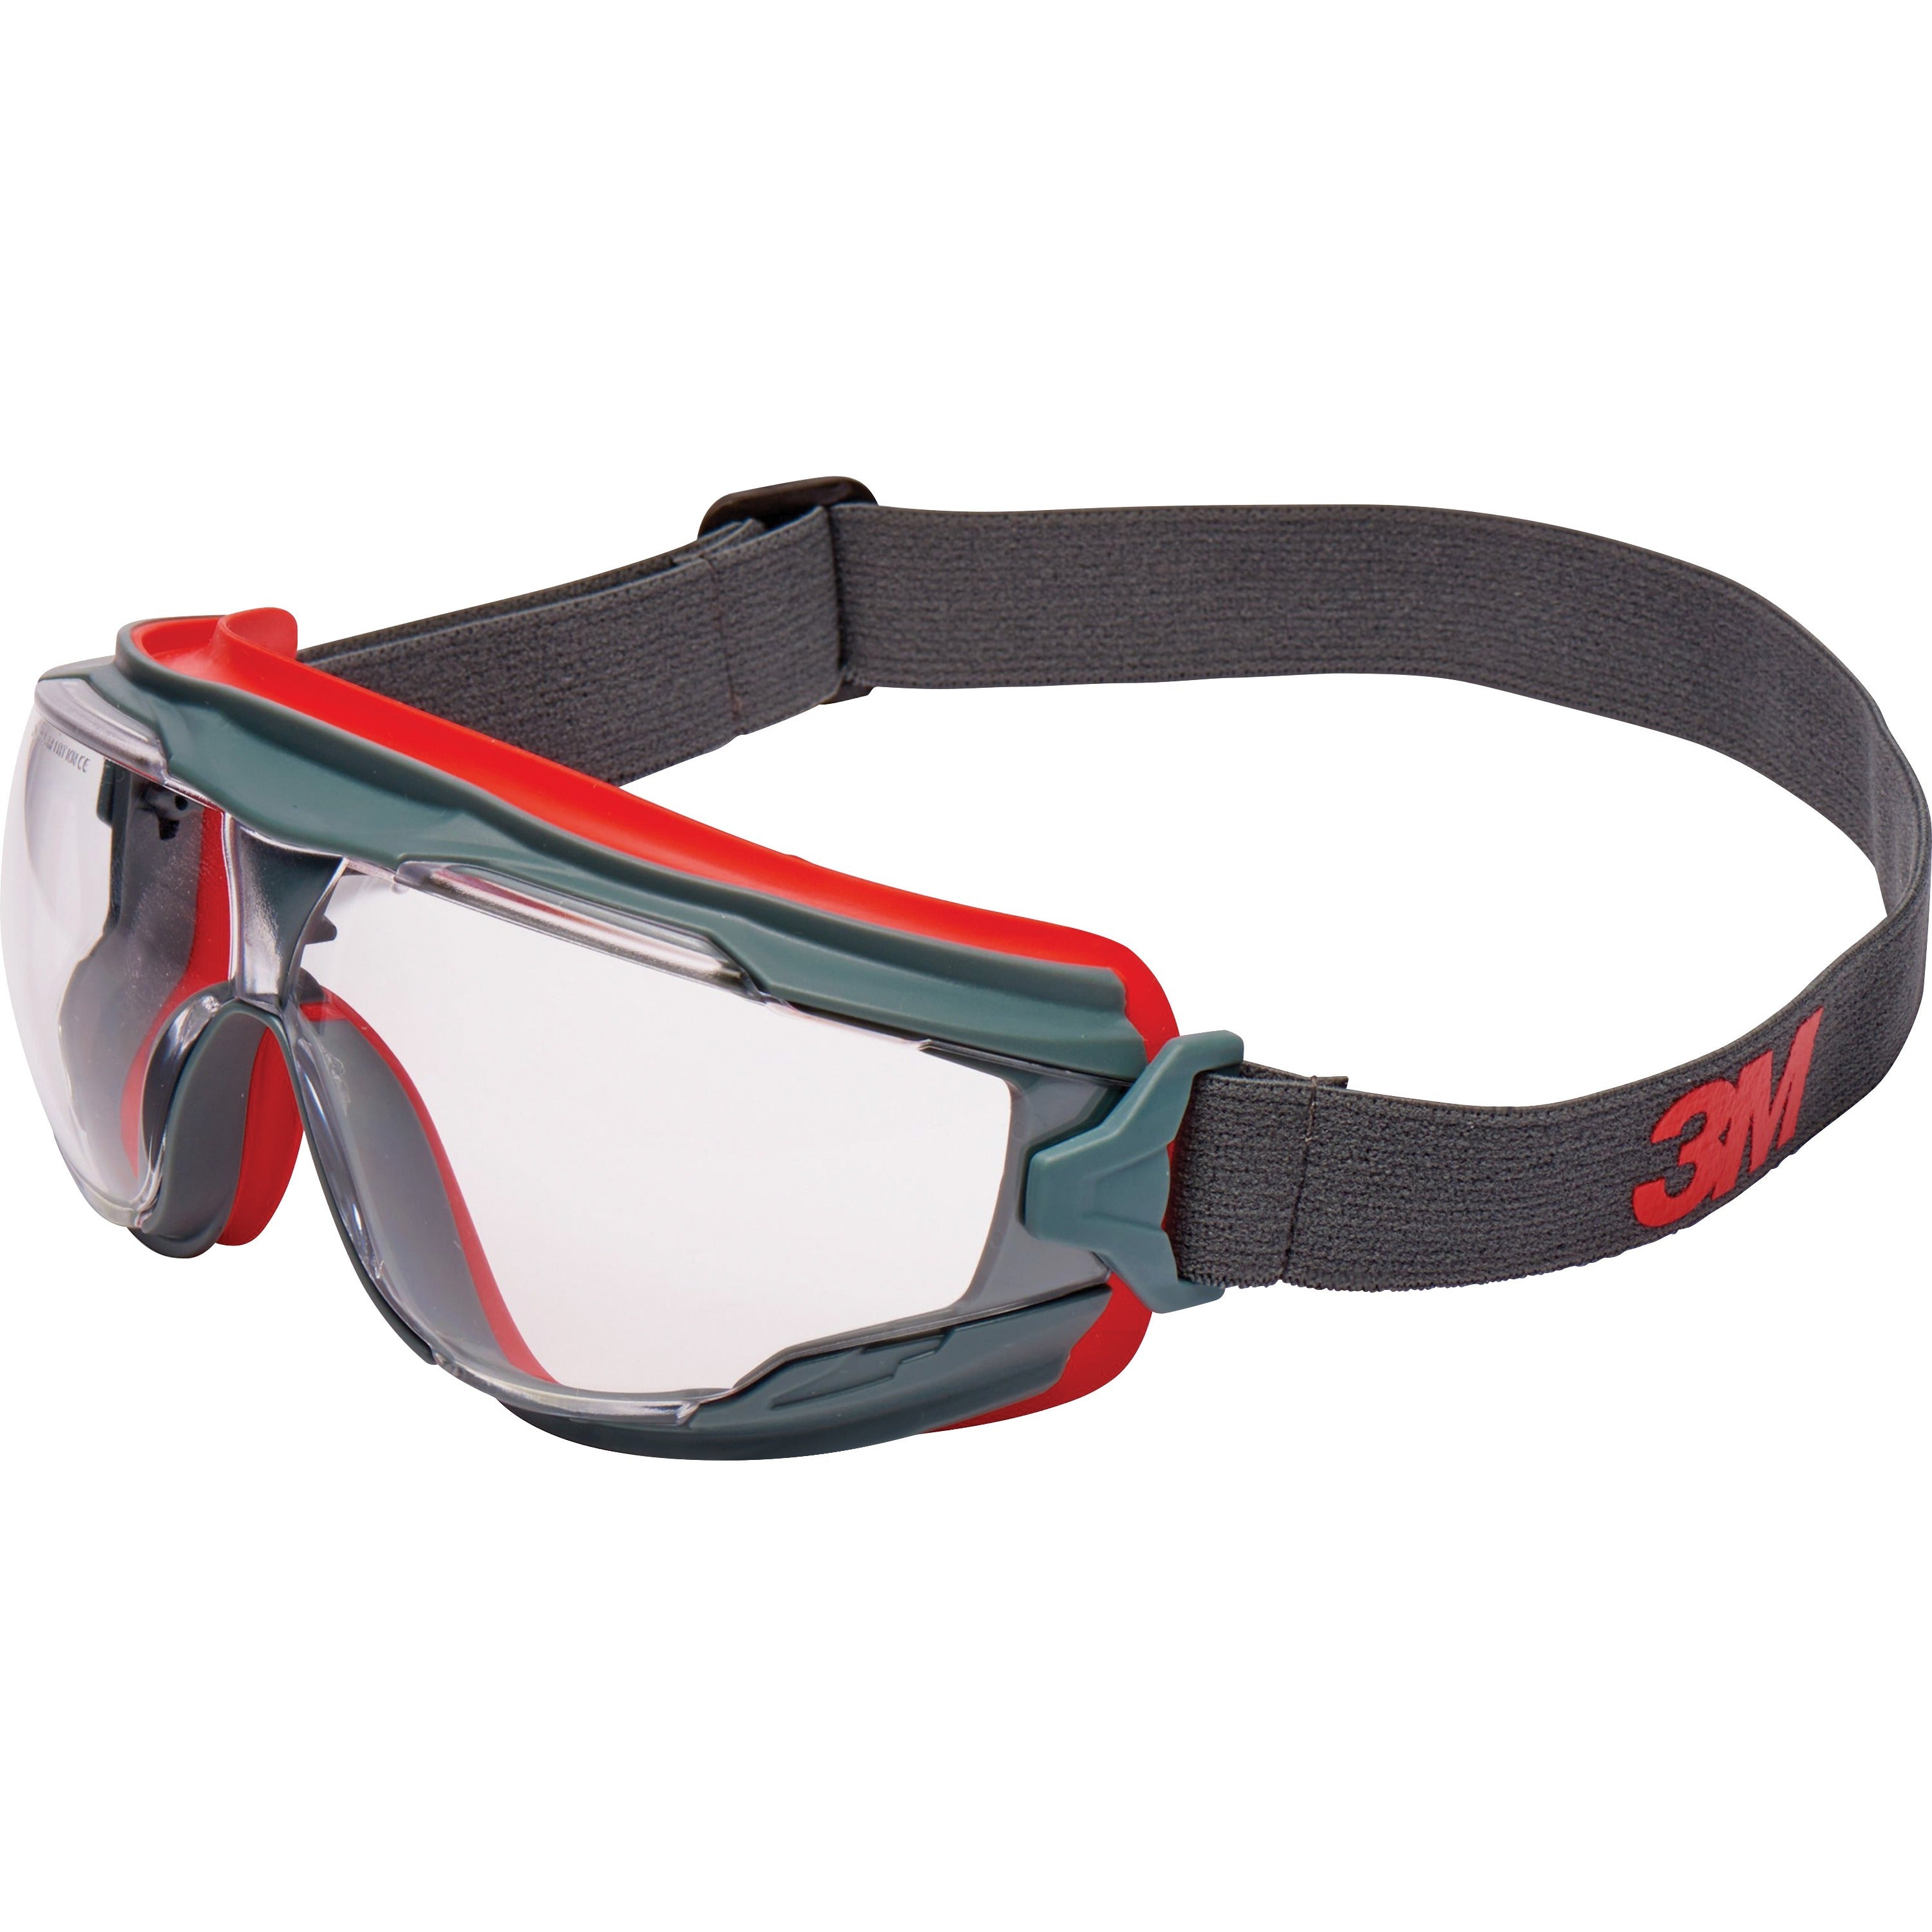 3m-gogglegear-500-series-scotchgard-anti-fog-goggles-recommended-for-eye-splash-ultraviolet-protection-gray-10-carton_mmmgg501sgafct - 2